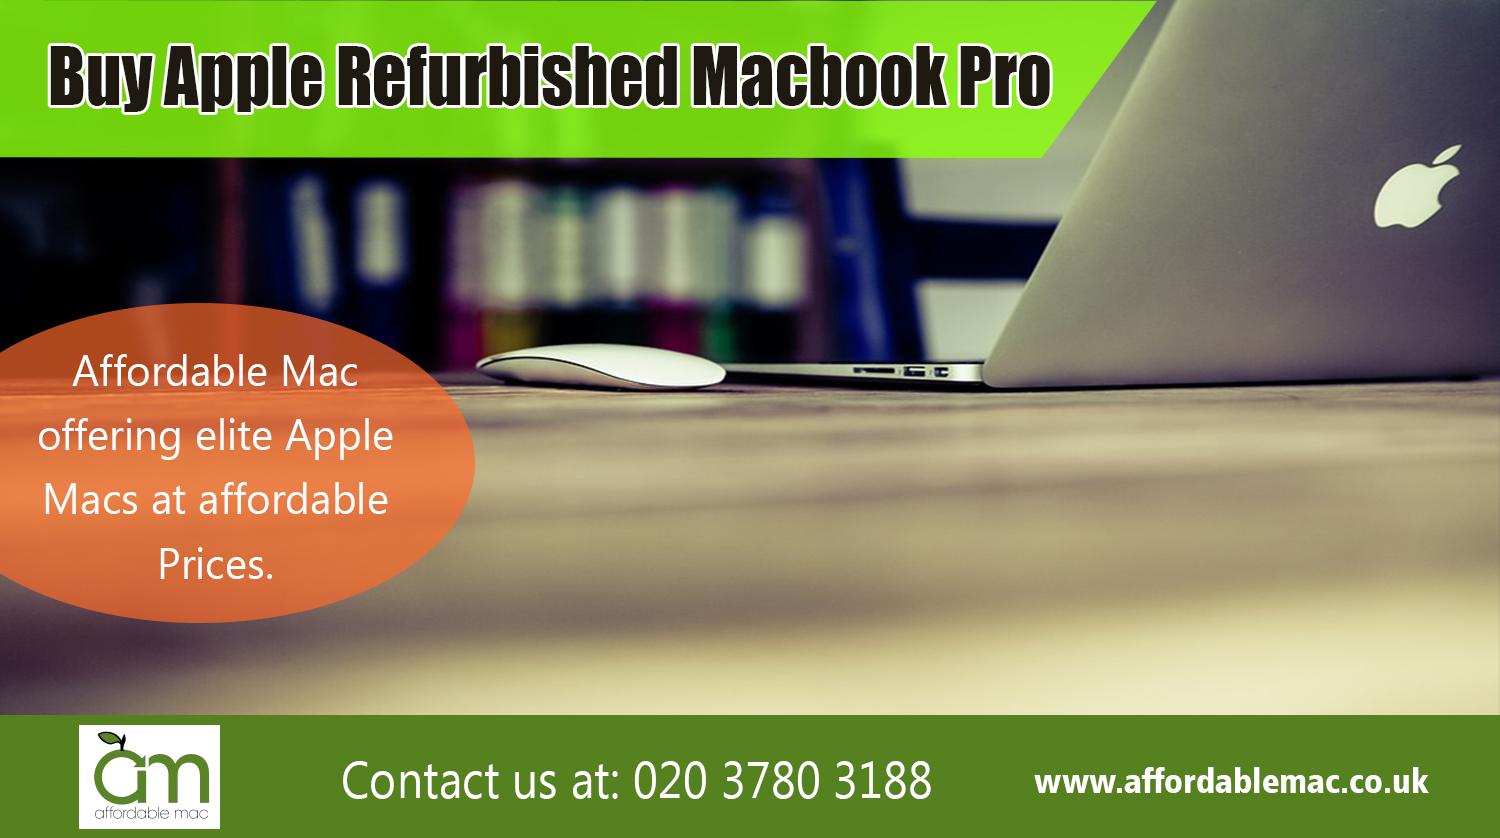 Buy Apple Refurbished Macbook Pro